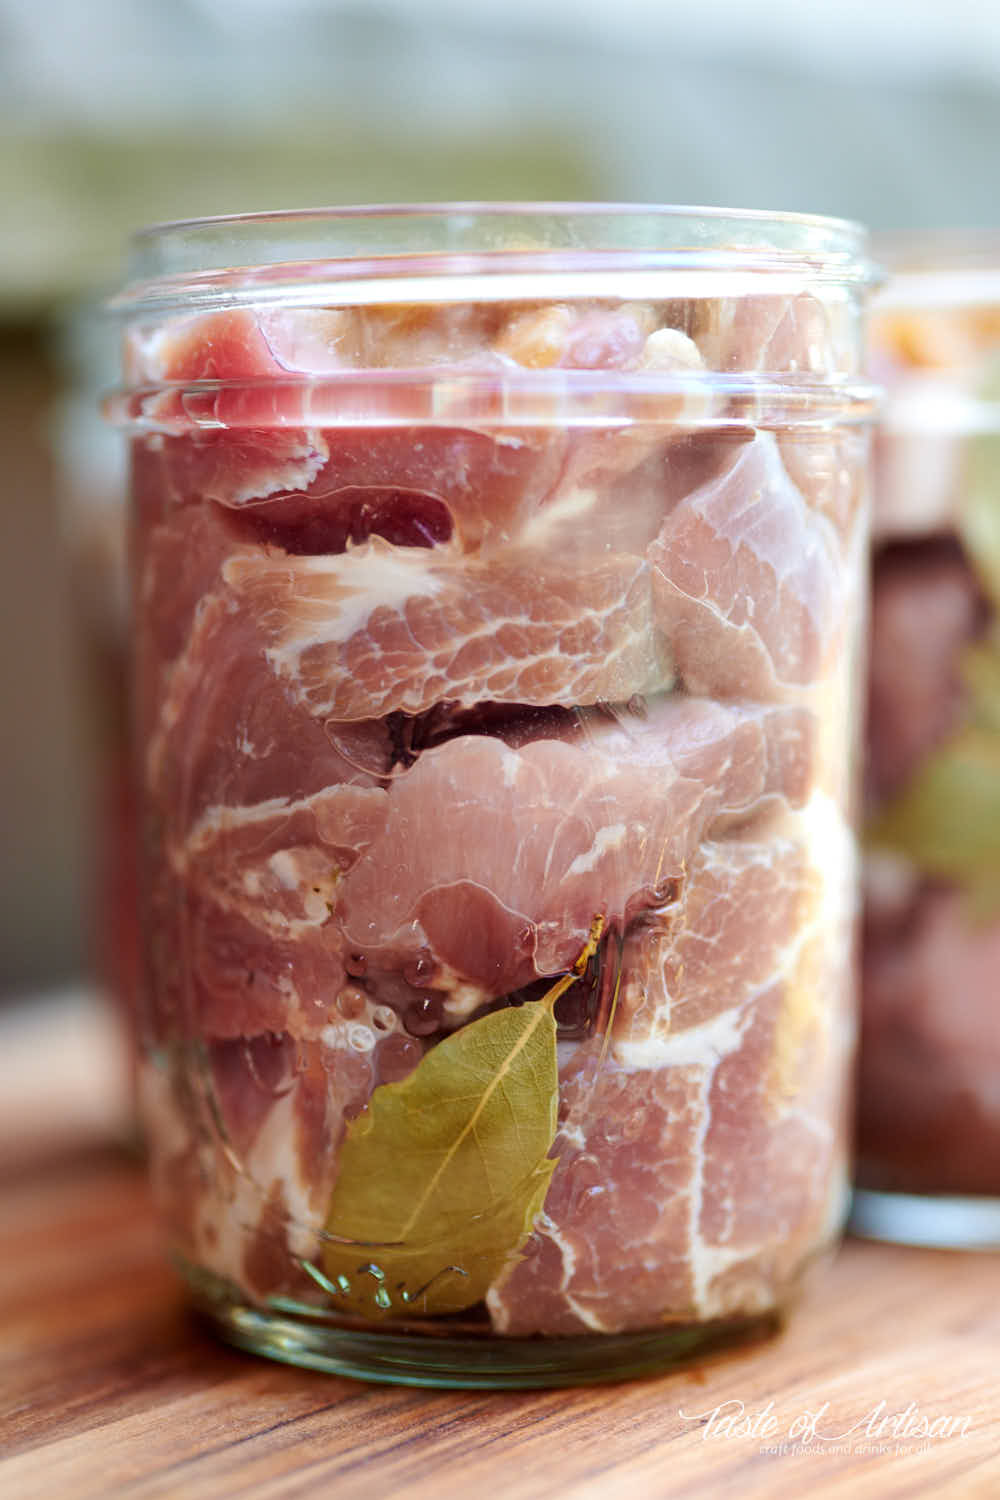 Chunks of raw pork in glass jars.